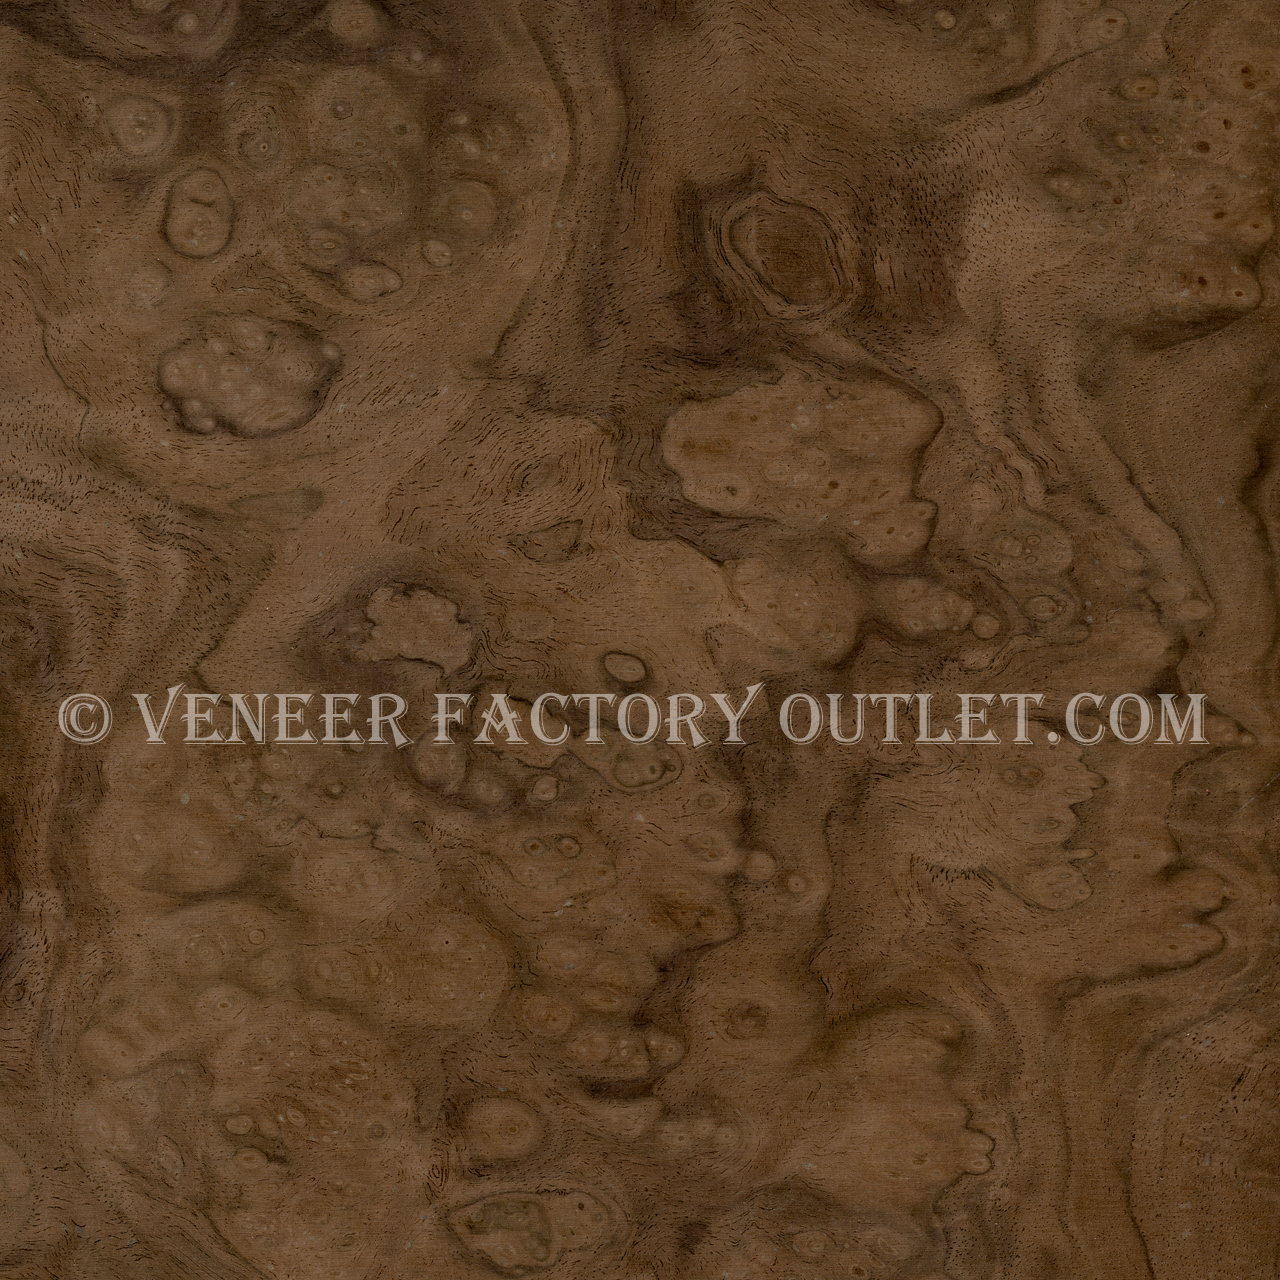 Walnut Veneer Sheets, Walnut Veneer Deals-Ven. Factory Outlet.com